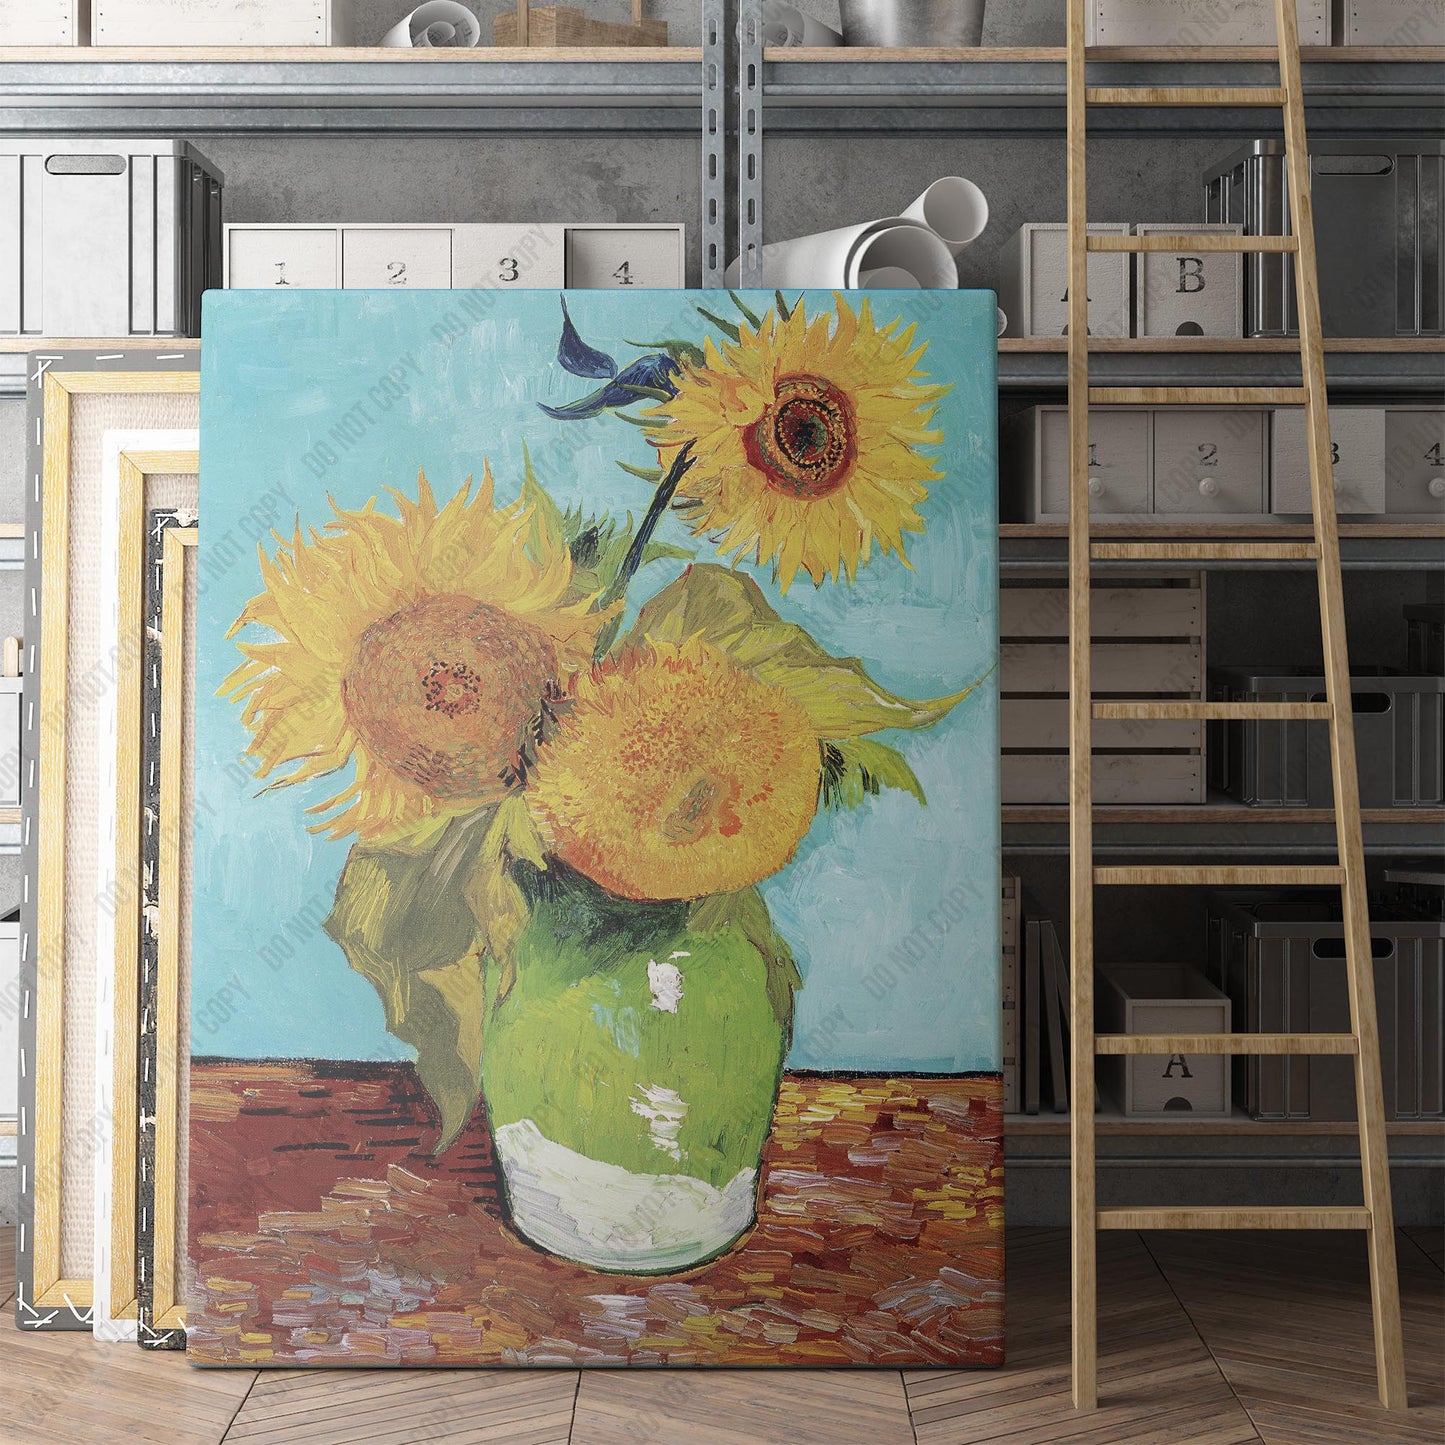 Vase with Three Sunflowers (1888) by Van Gogh